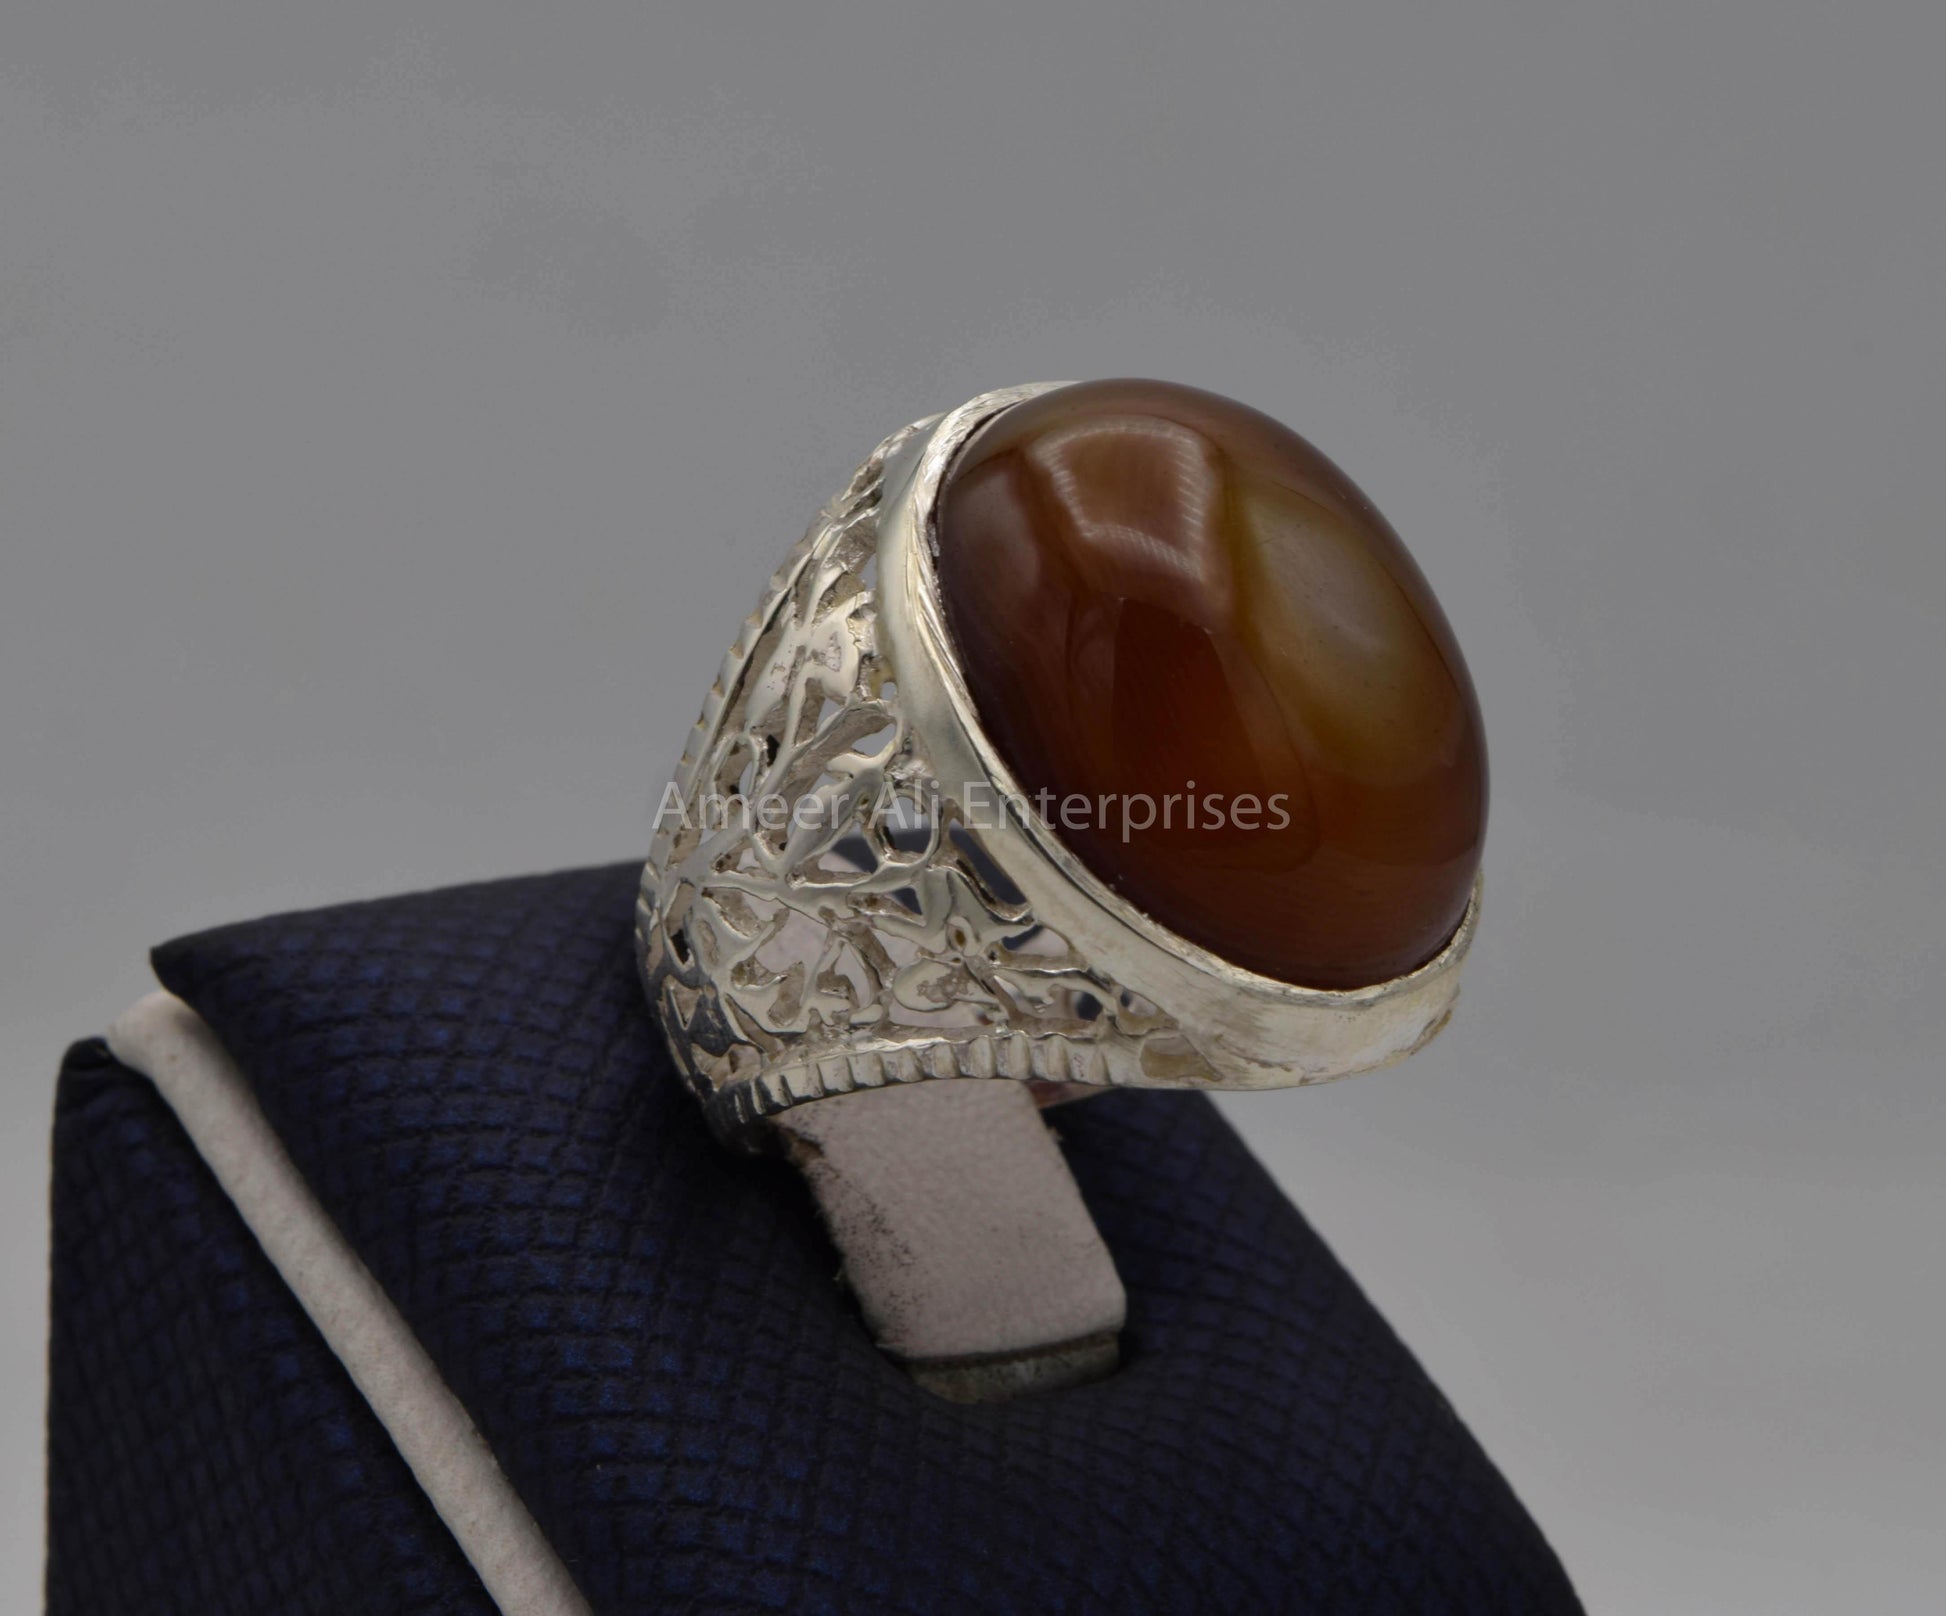 AAE 5664 Chandi Ring 925, Stone: Sulemani Aqeeq - AmeerAliEnterprises